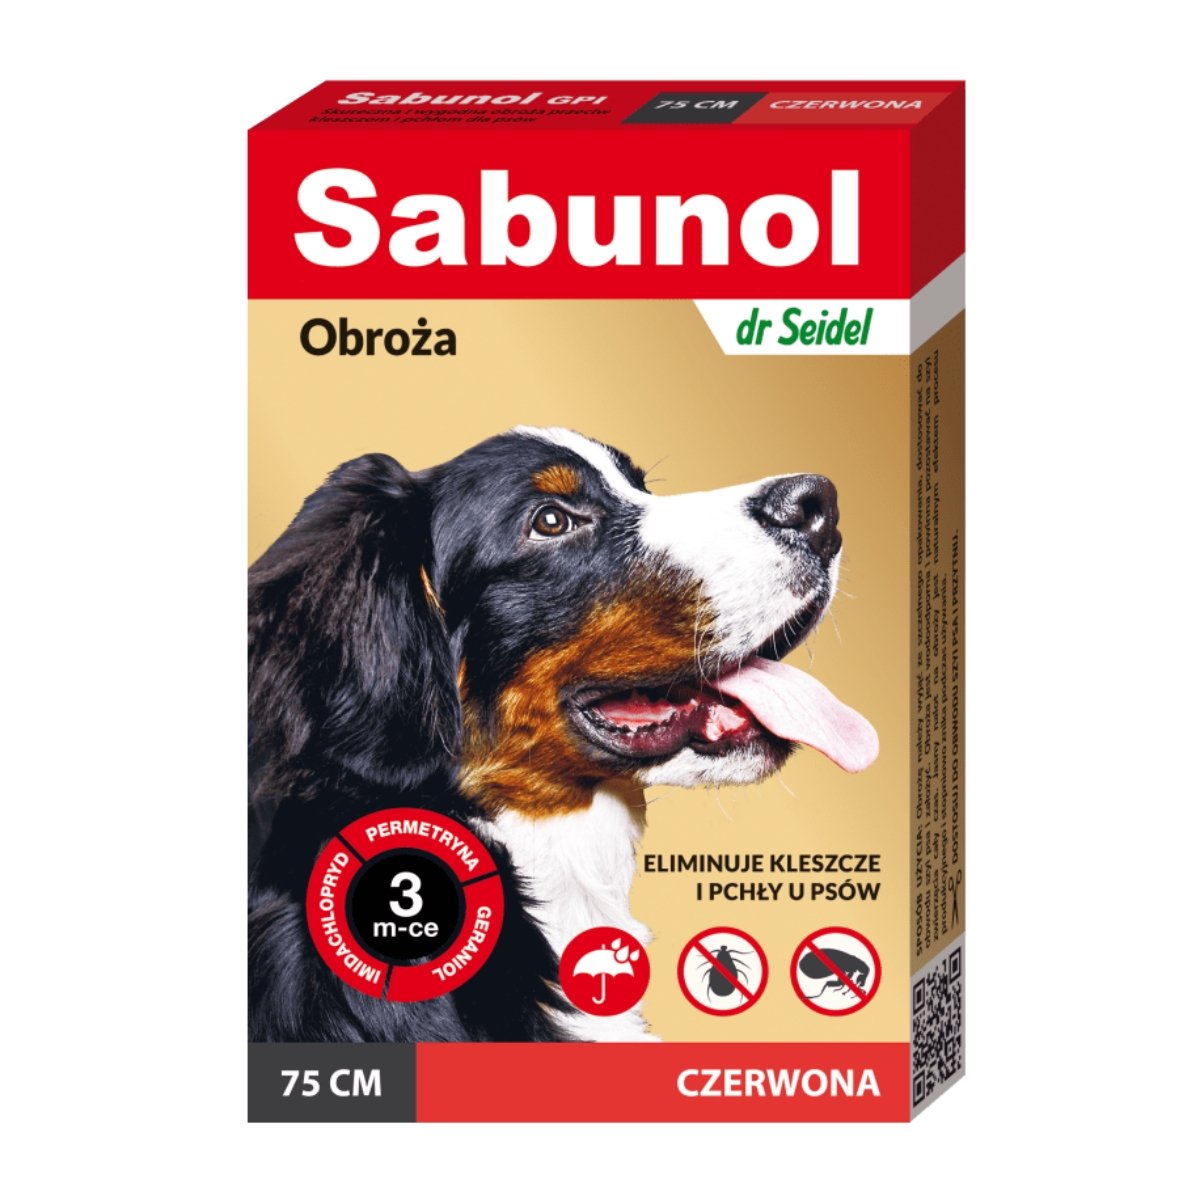 SABUNOL GPI, deparazitare externă câini, zgardă, L-XL(25 - 50kg), 75 cm, roșu, 3 luni x 1buc